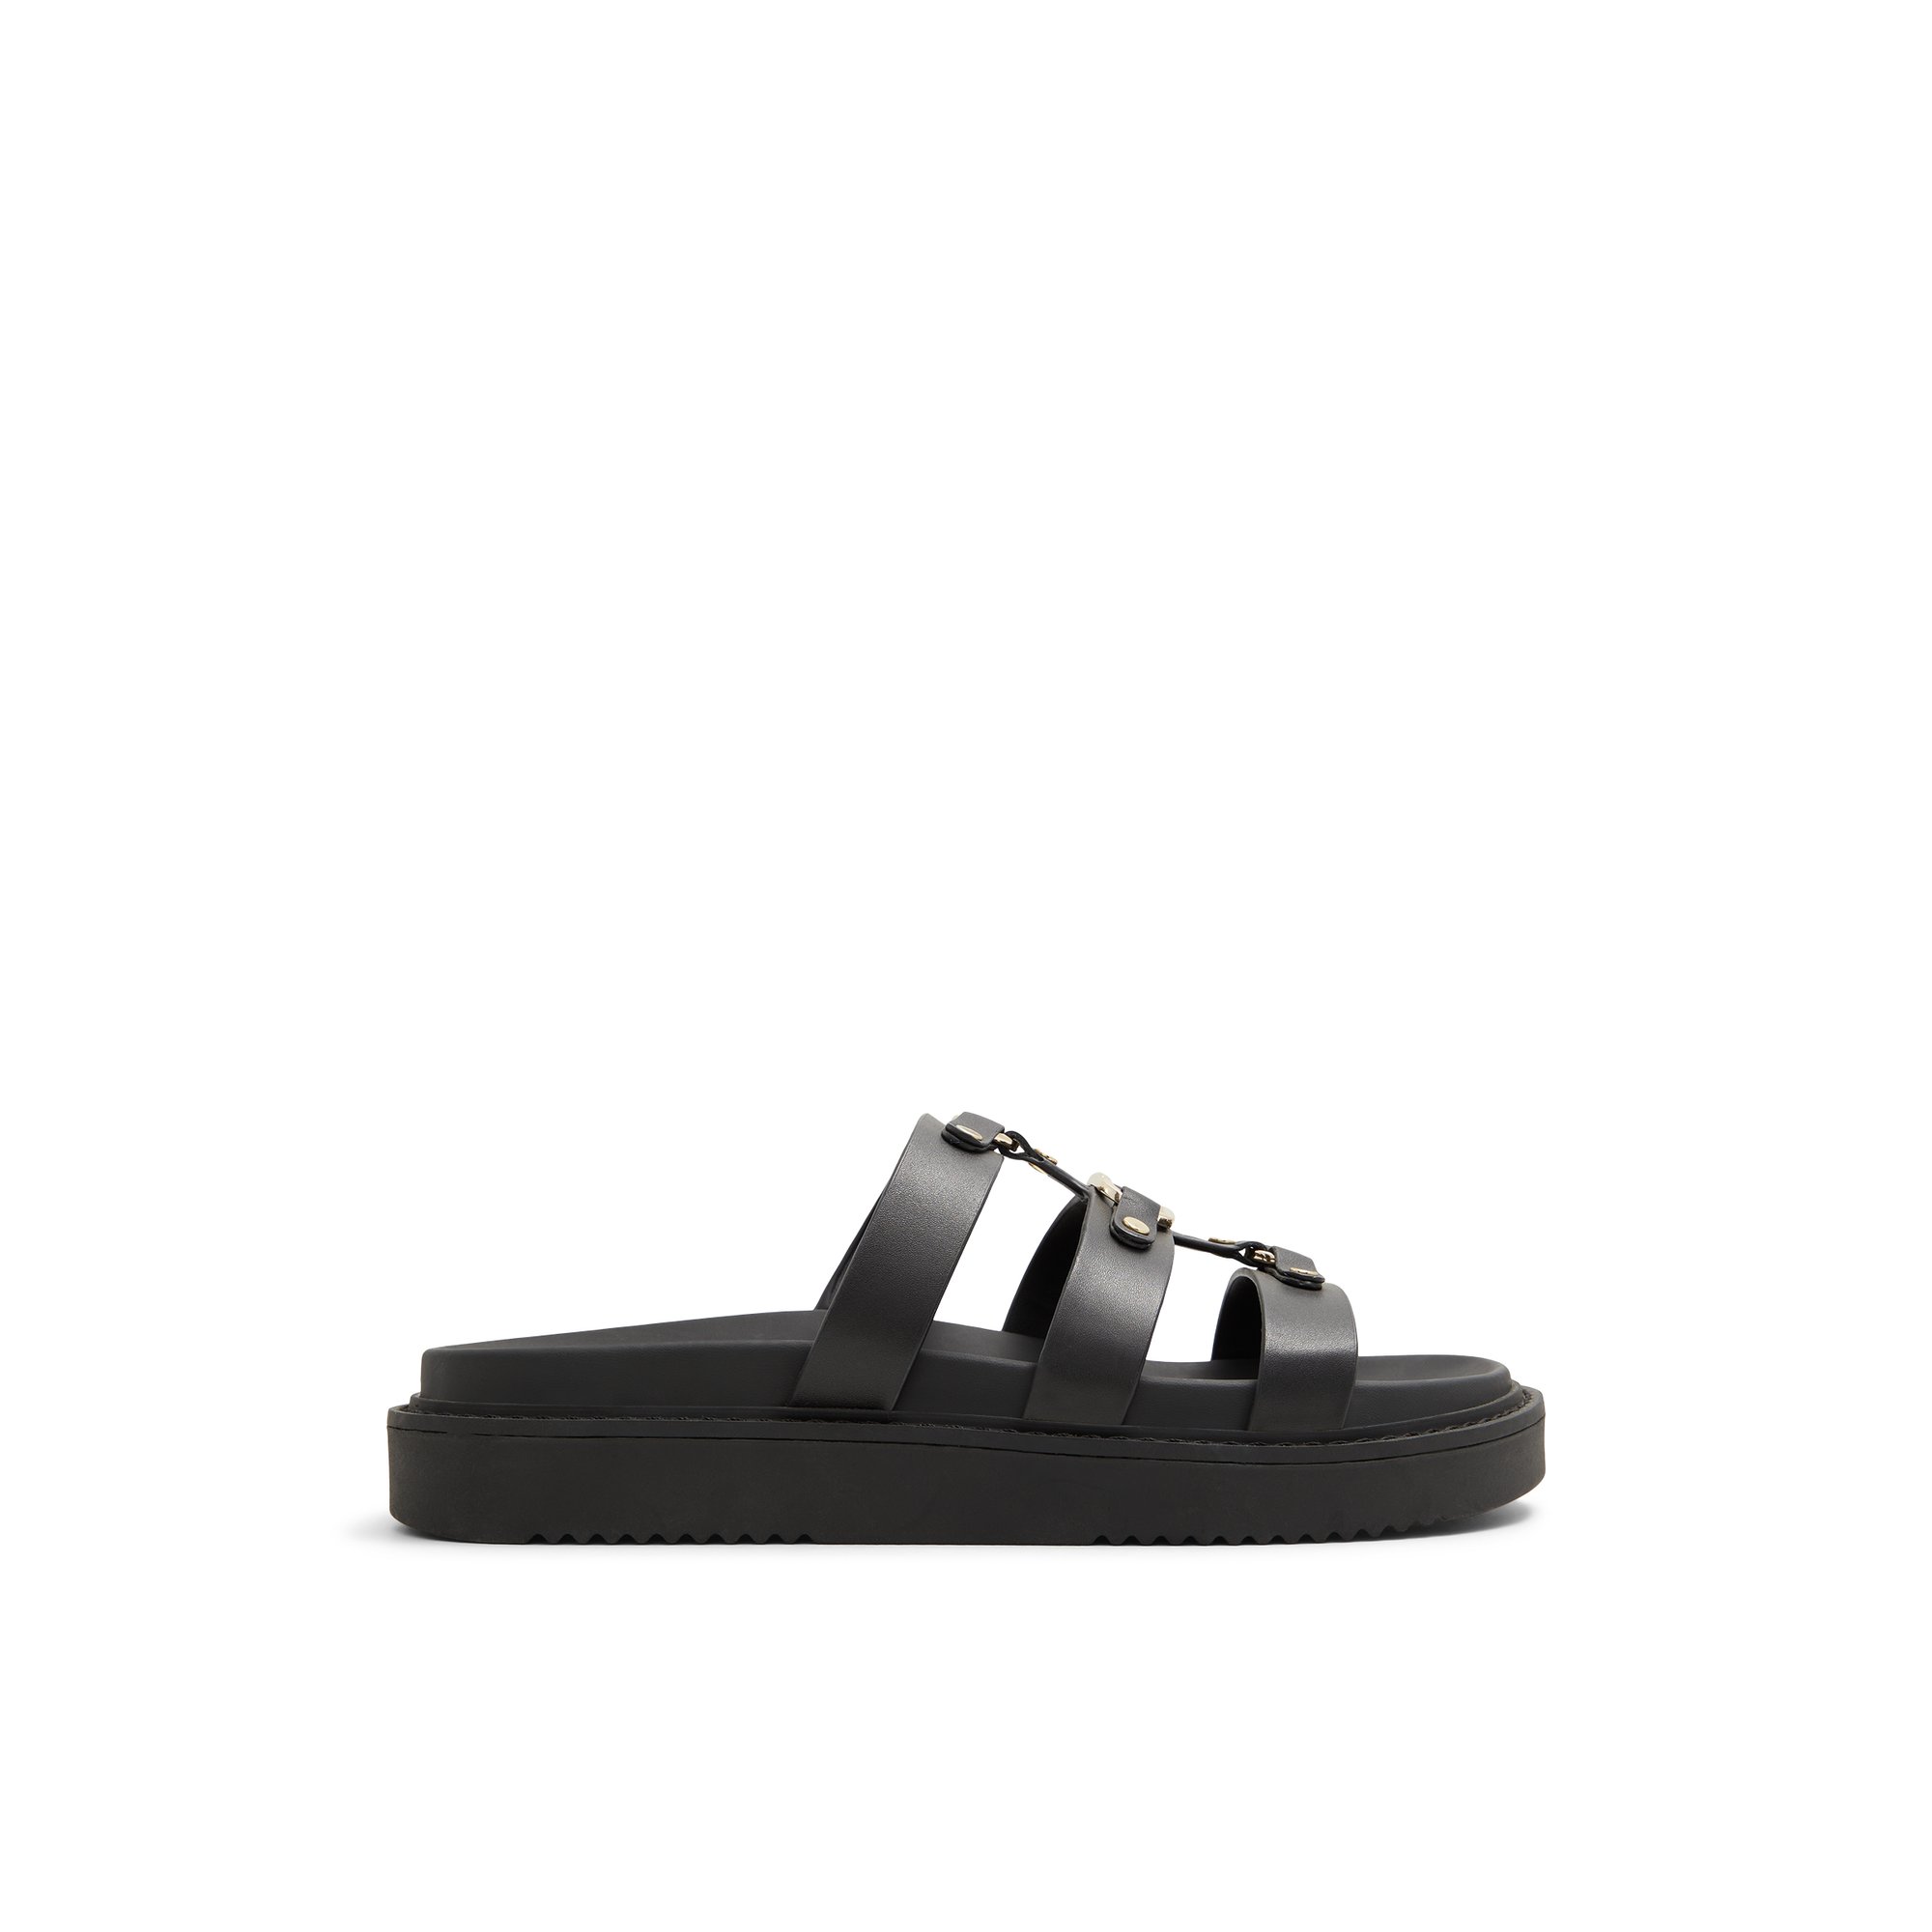 ALDO Mariesoleil - Women's Flat Sandals - Black